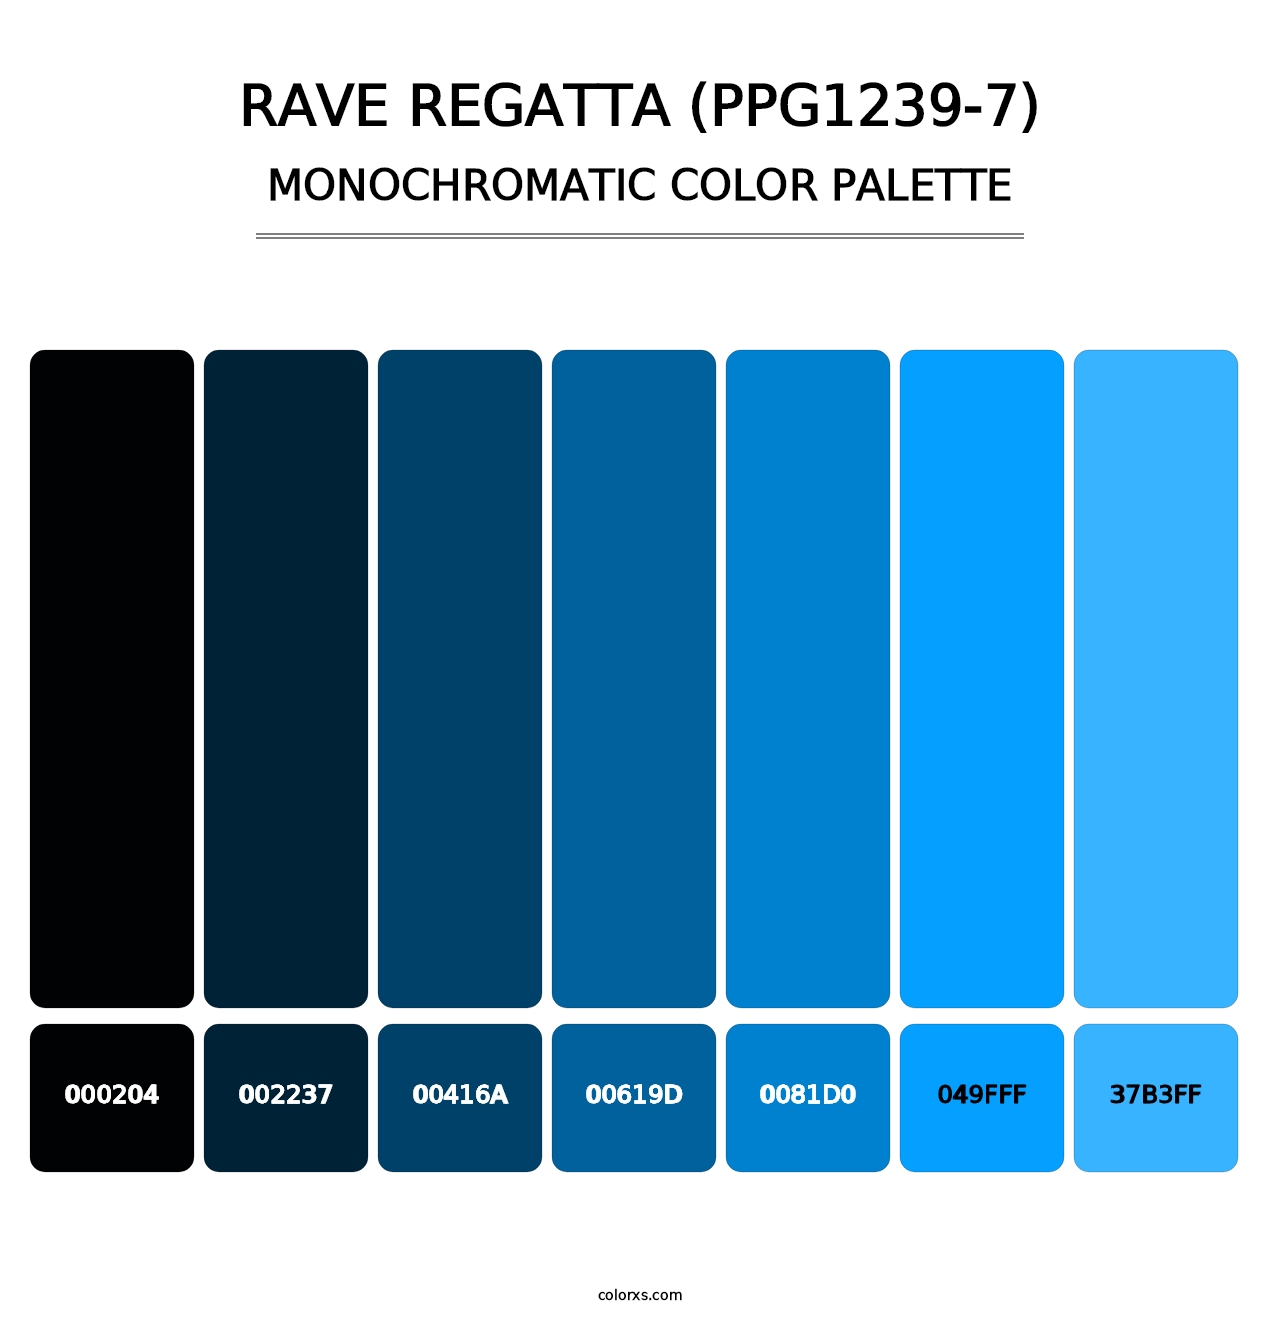 Rave Regatta (PPG1239-7) - Monochromatic Color Palette